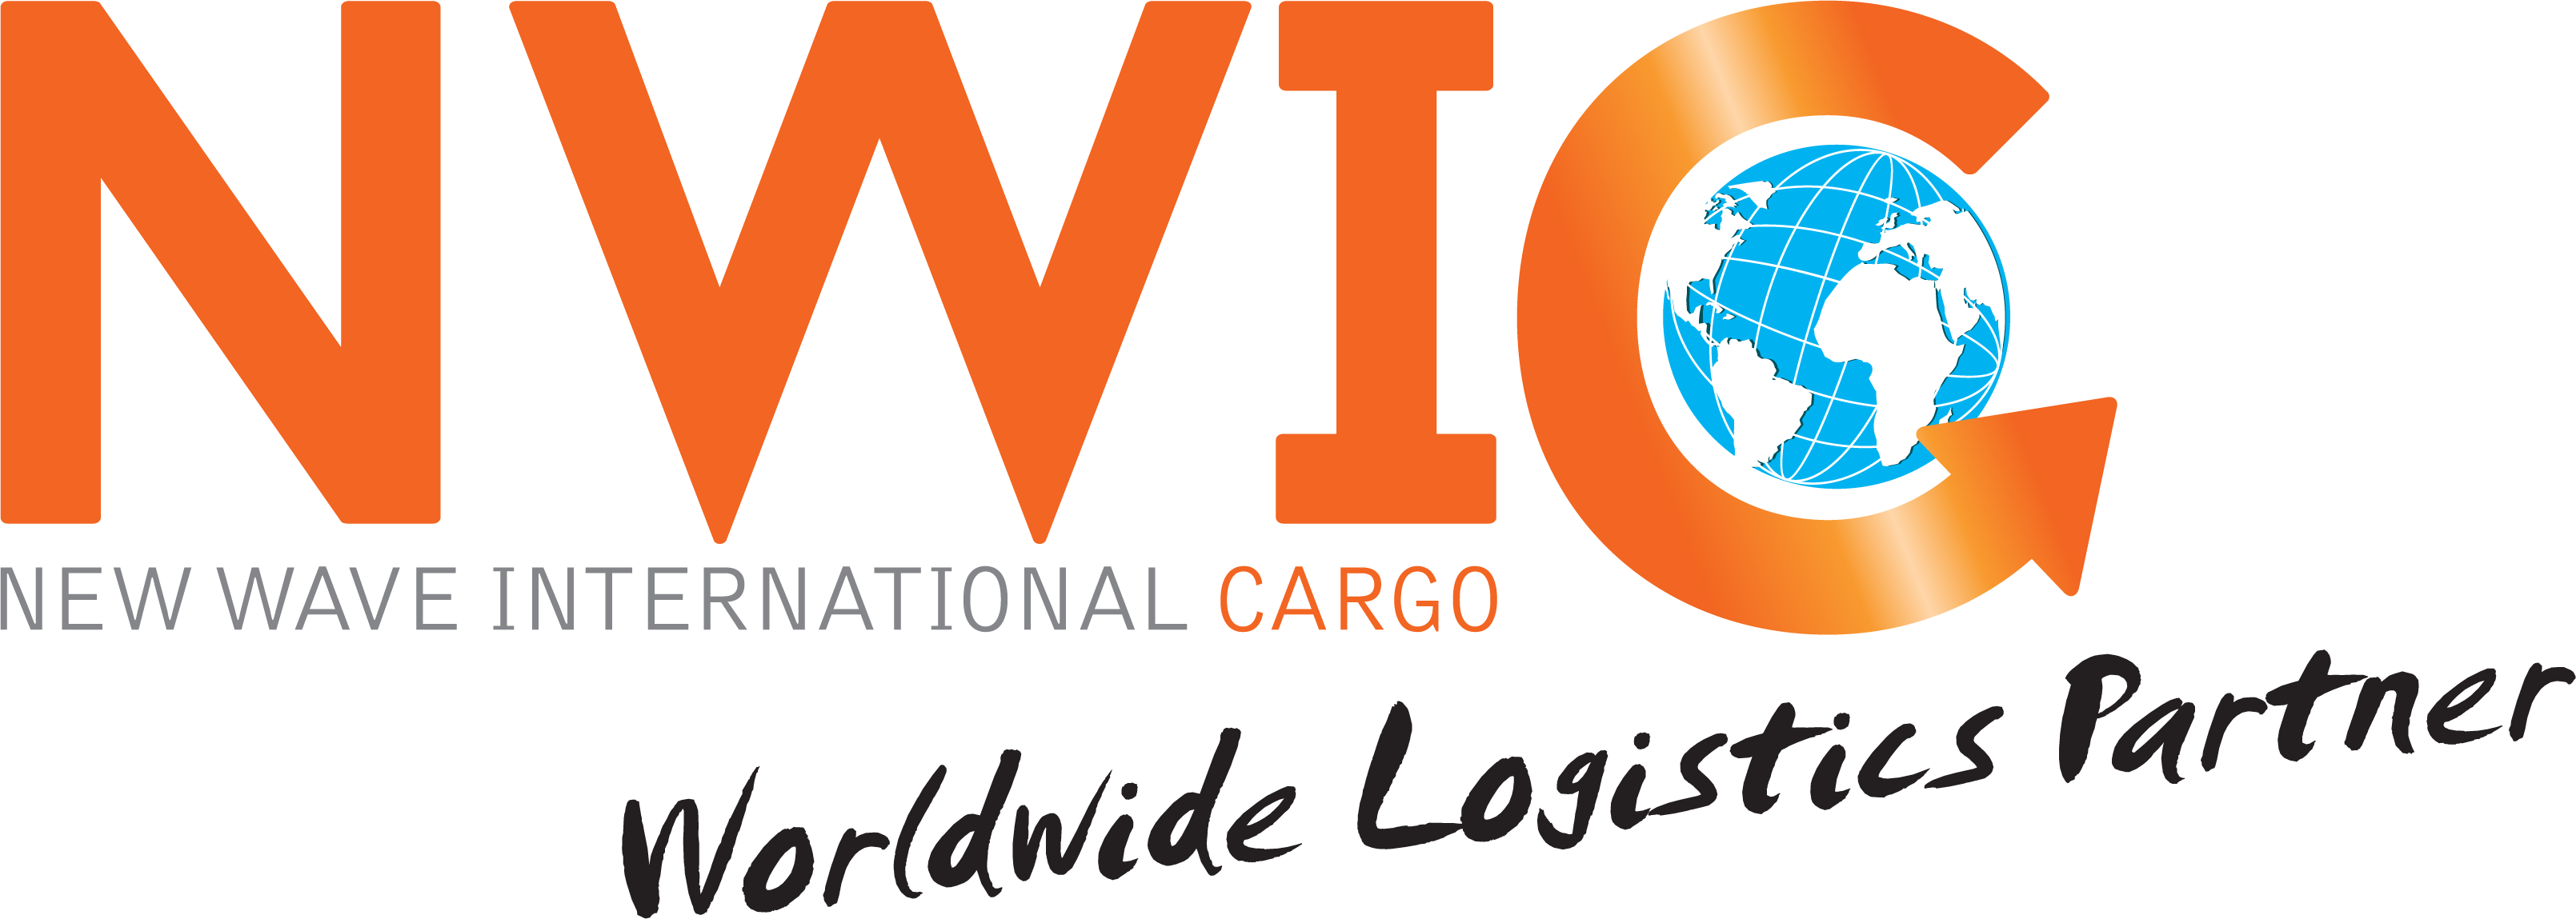 New Wave International Cargo